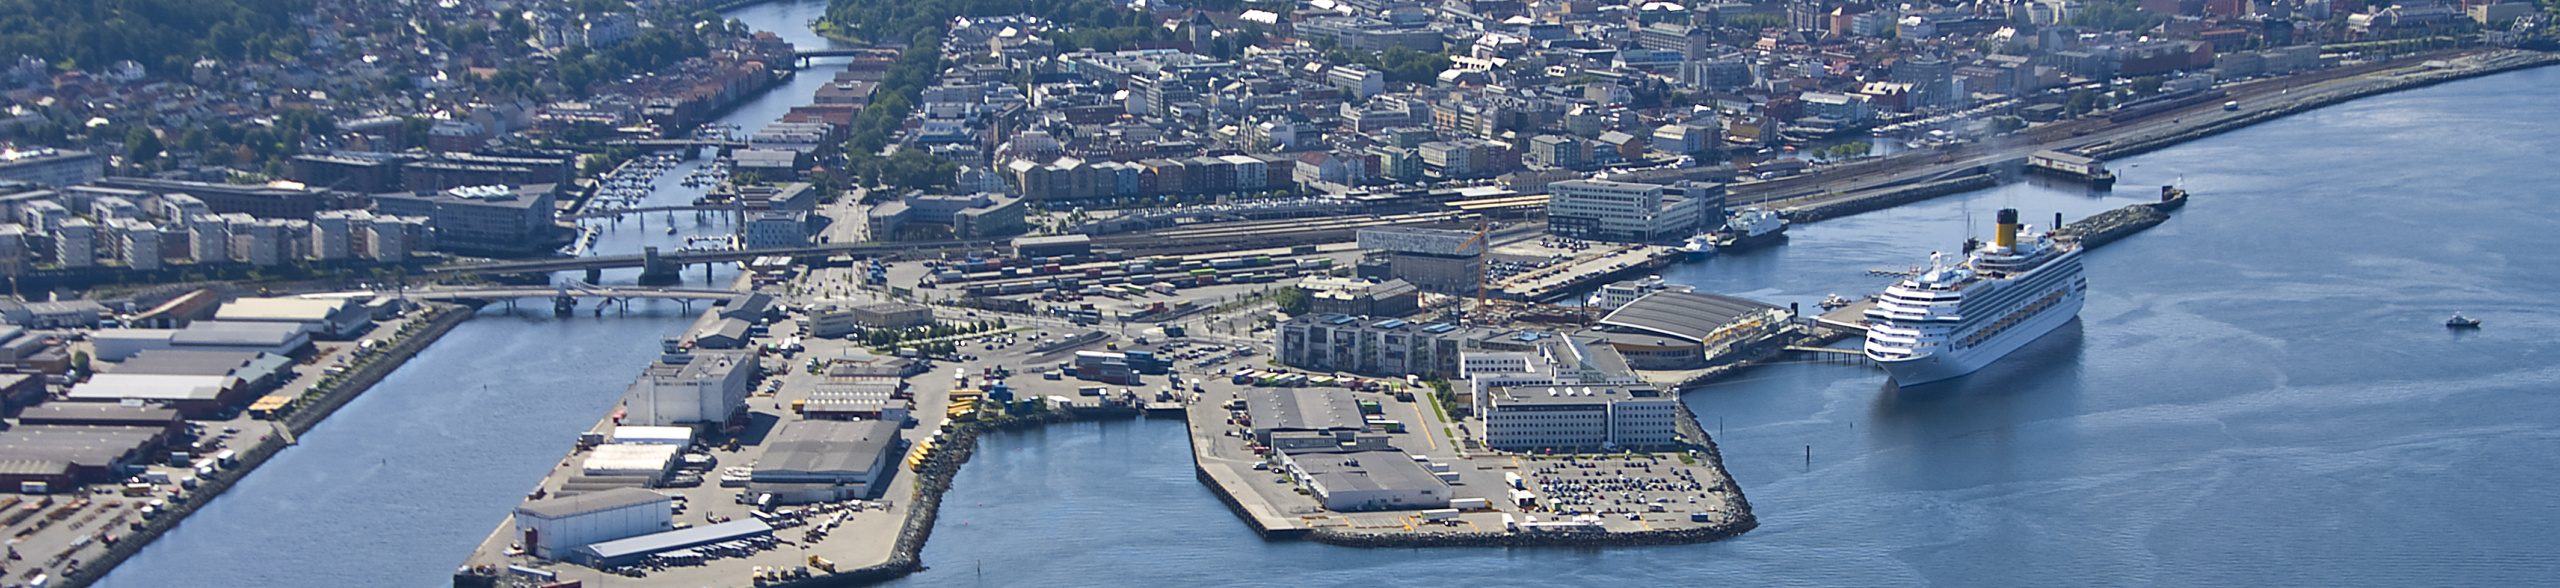 Trondheim Havn blir energihub for nullutslipp